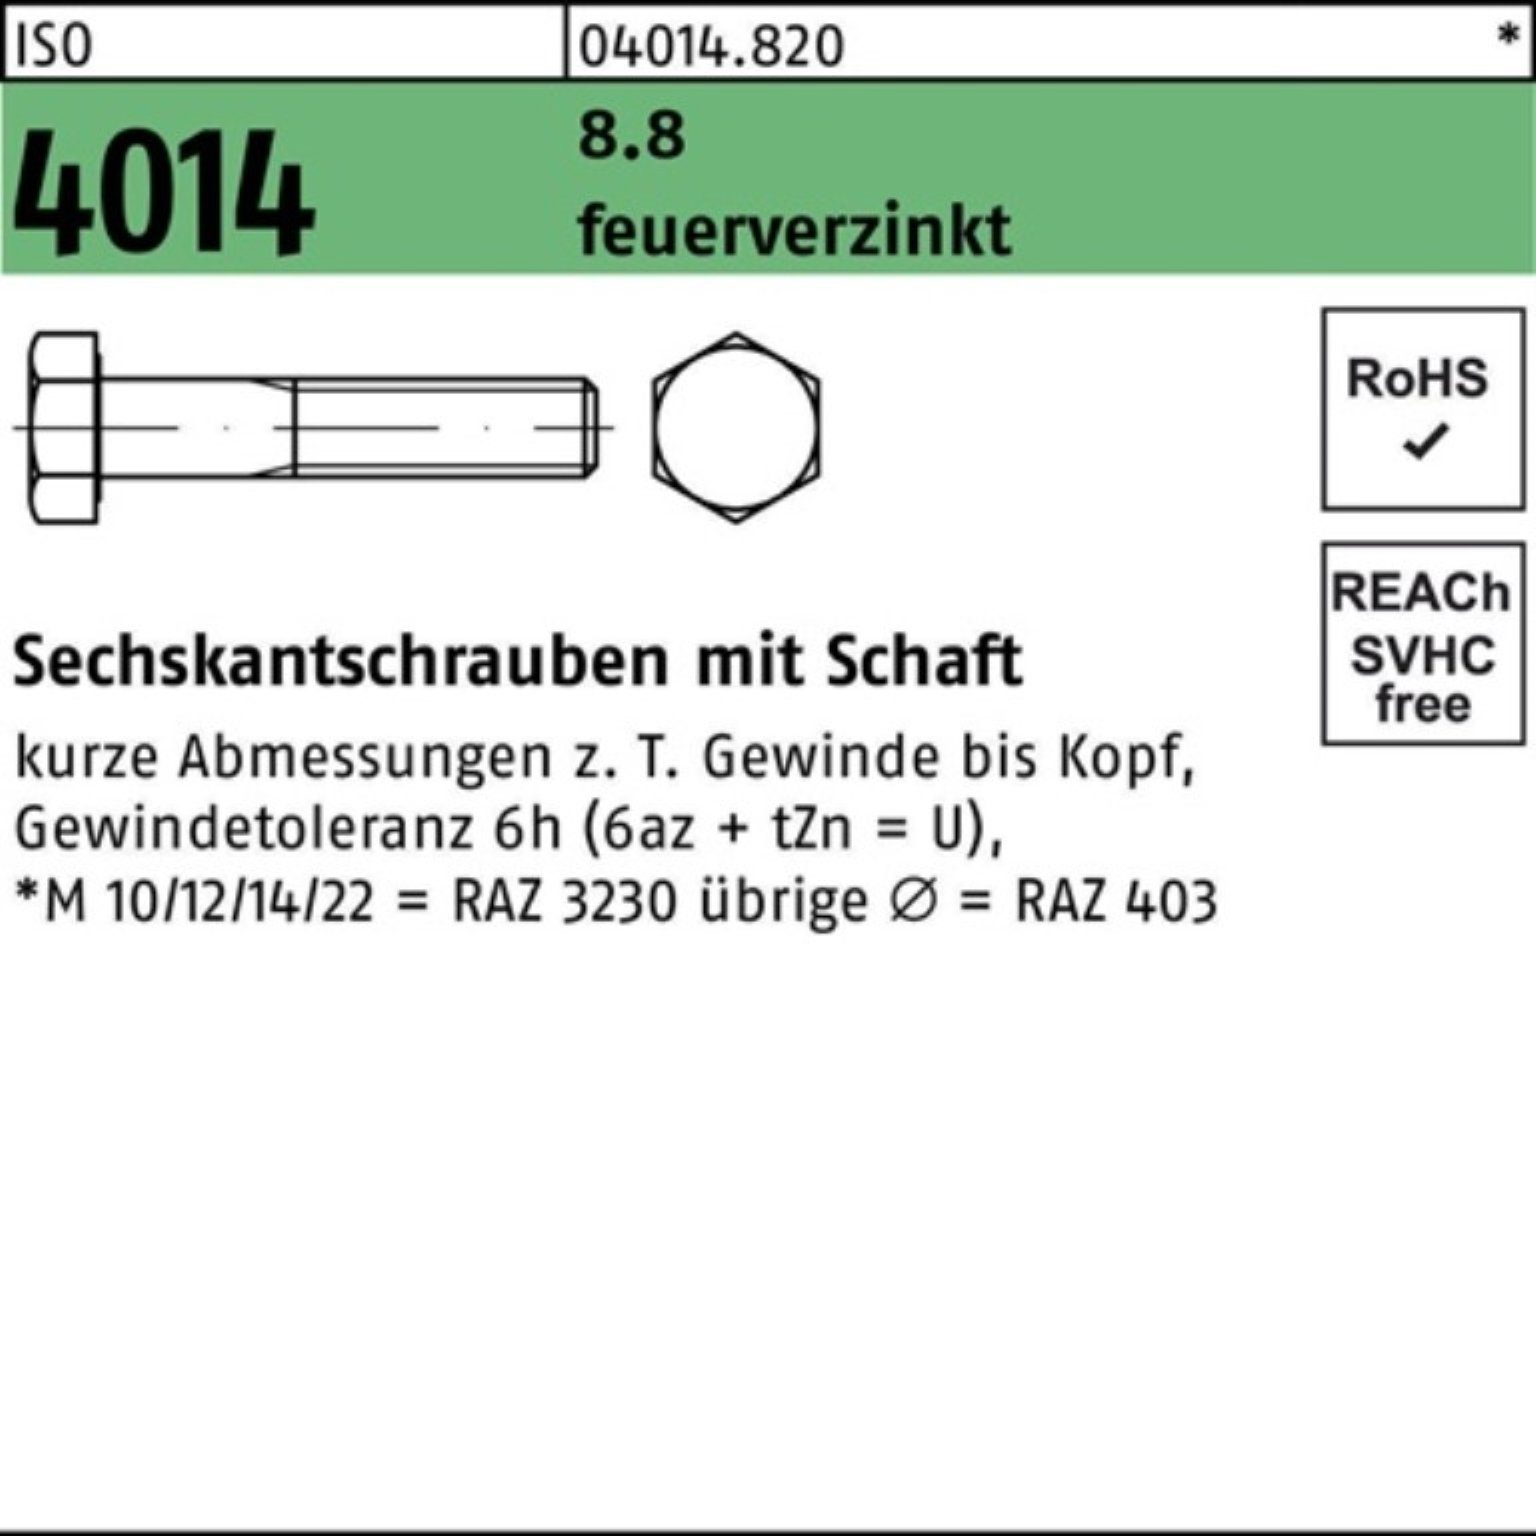 Bufab Sechskantschraube 100er Pack Sechskantschraube ISO 4014 Schaft M10x 110 8.8 feuerverz. 5 | Schrauben